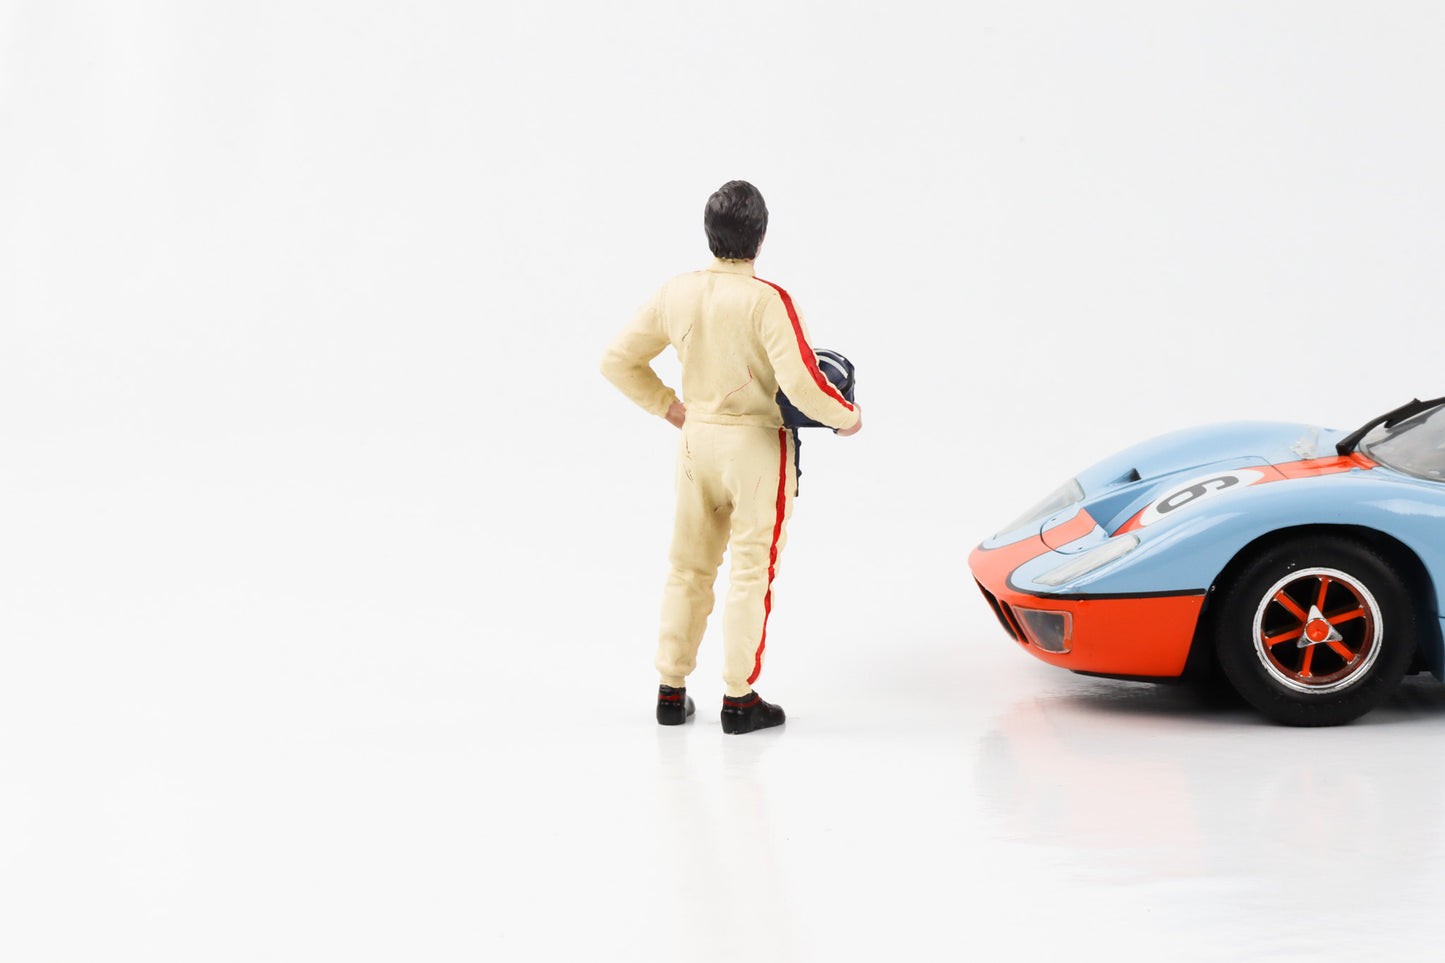 1:18 Figure Le Mans F1 Racing Legends racer figures American Diorama